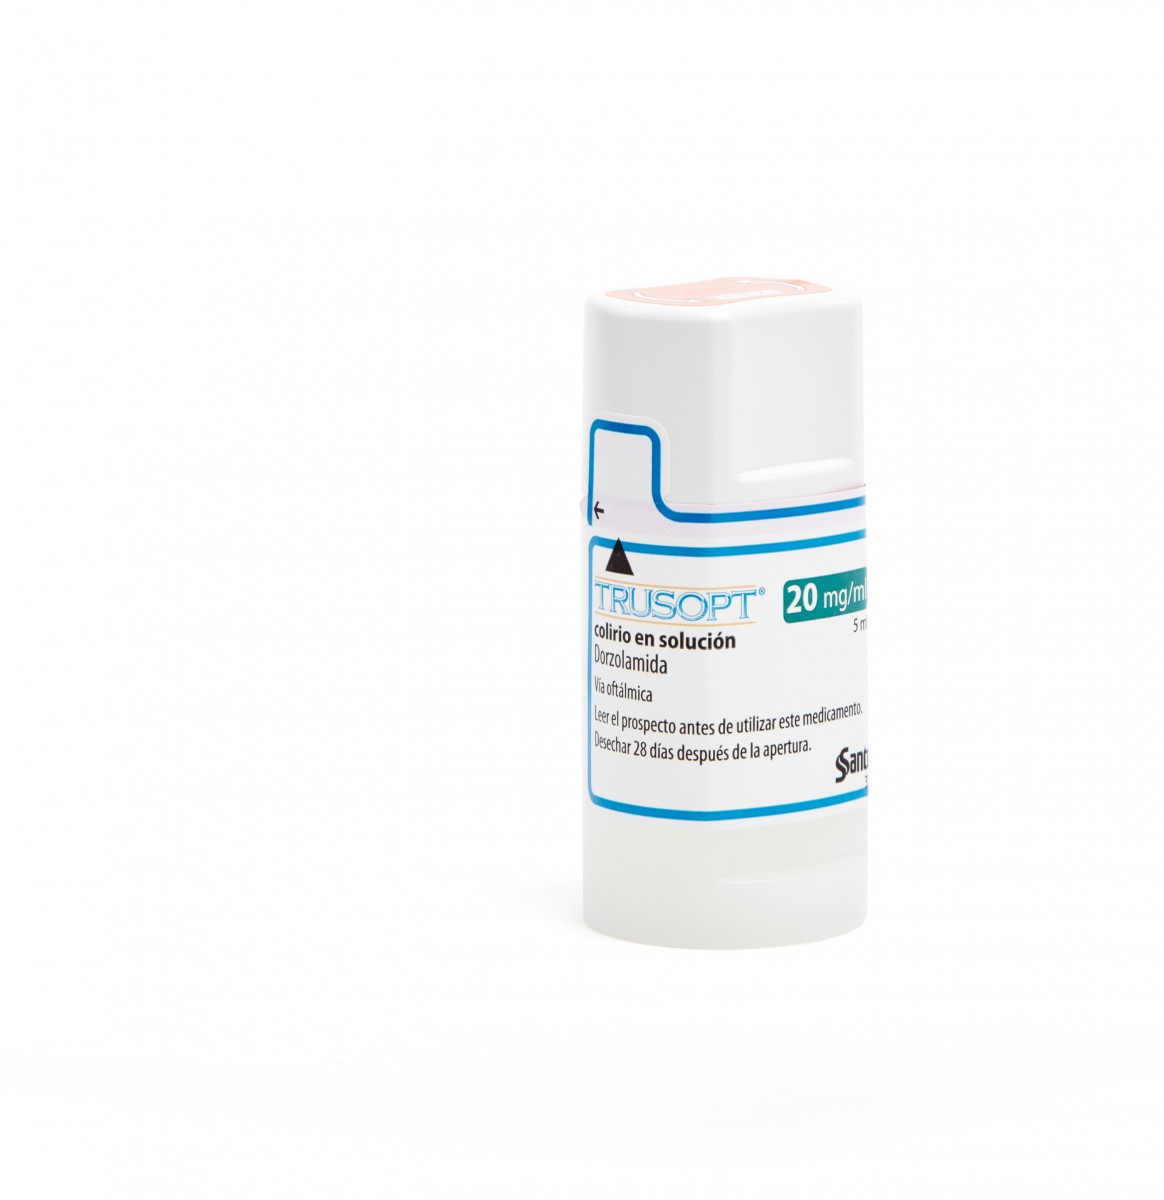 TRUSOPT  20 mg/ml COLIRIO EN SOLUCION , 1 frasco de 5 ml fotografía de la forma farmacéutica.